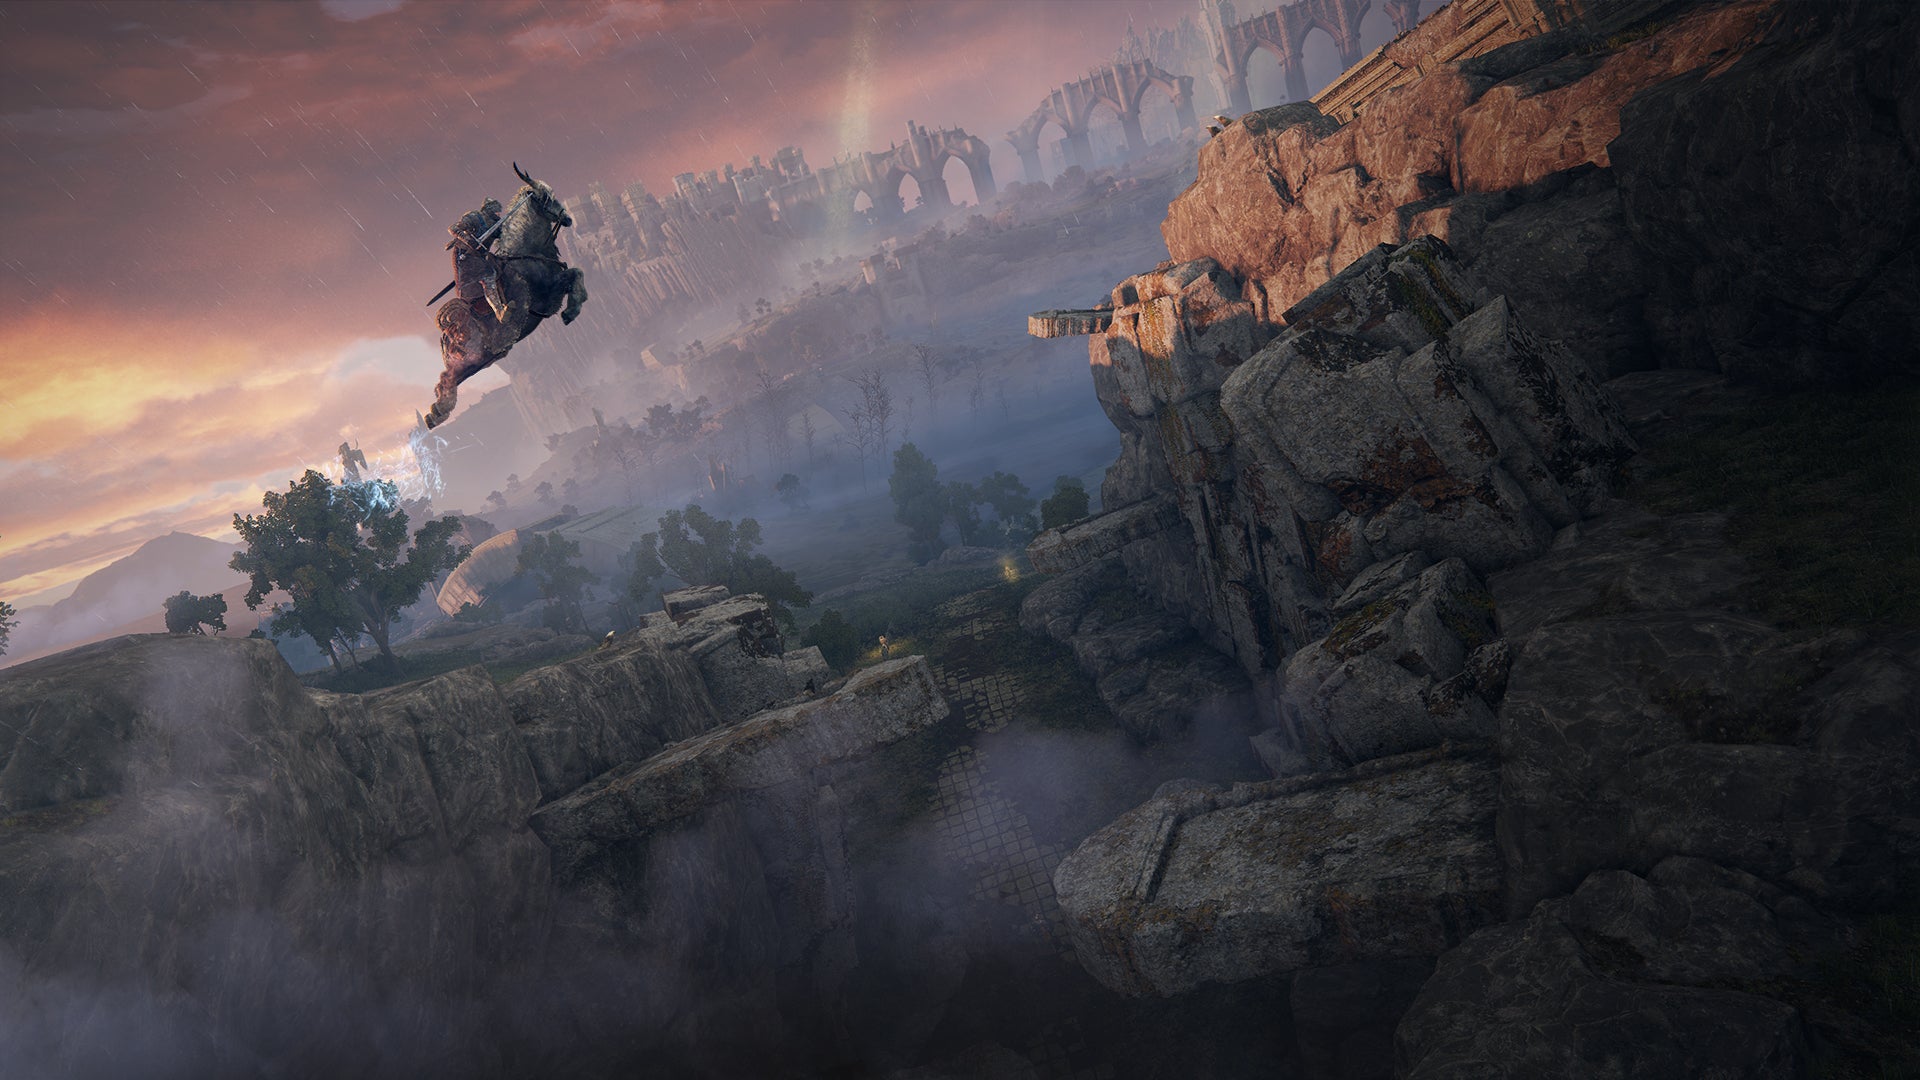 A warrior on a horse leaps high towards a cliff in an Elden Ring screenshot.